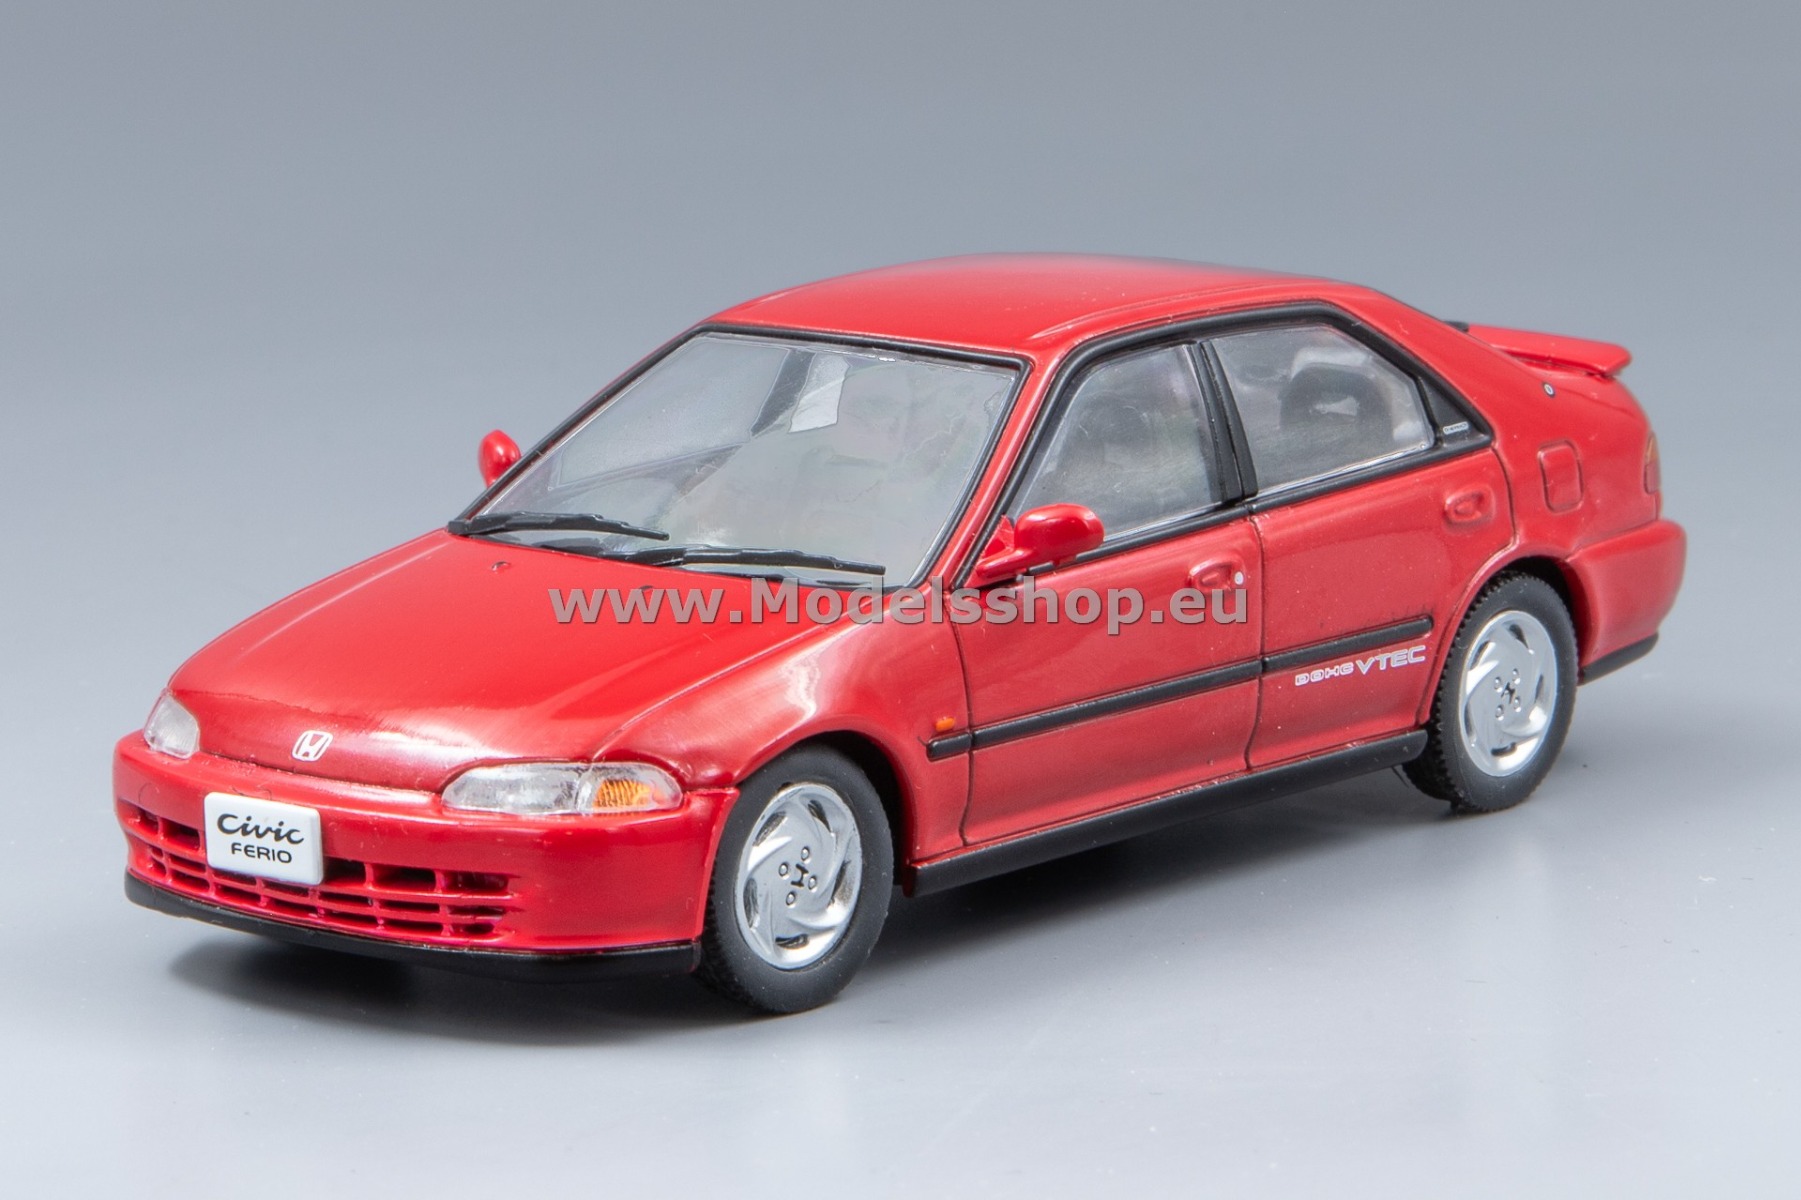 Honda Civic Ferio Sir, 1991, RHD /dark red/